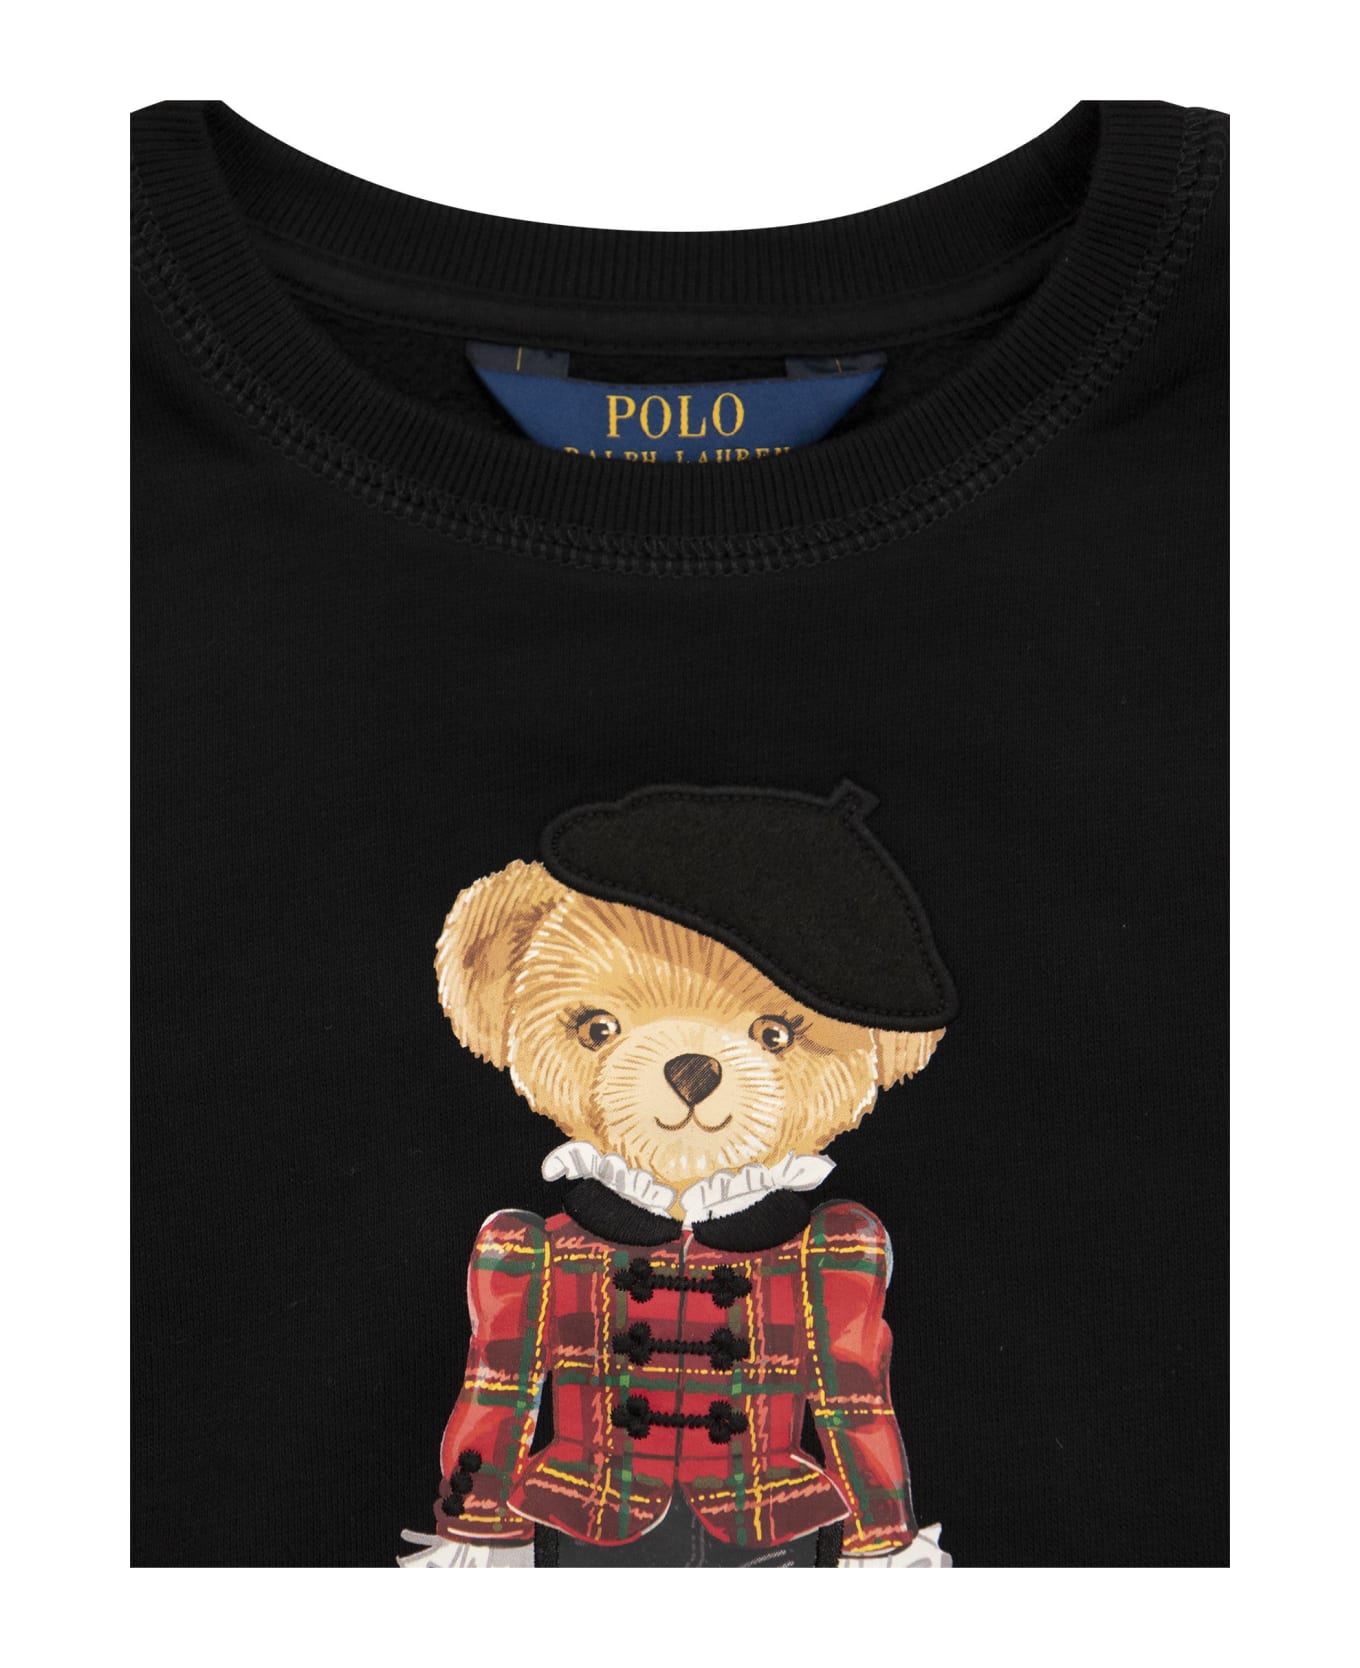 Polo Ralph Lauren Bear Polo Sweatshirt - Black